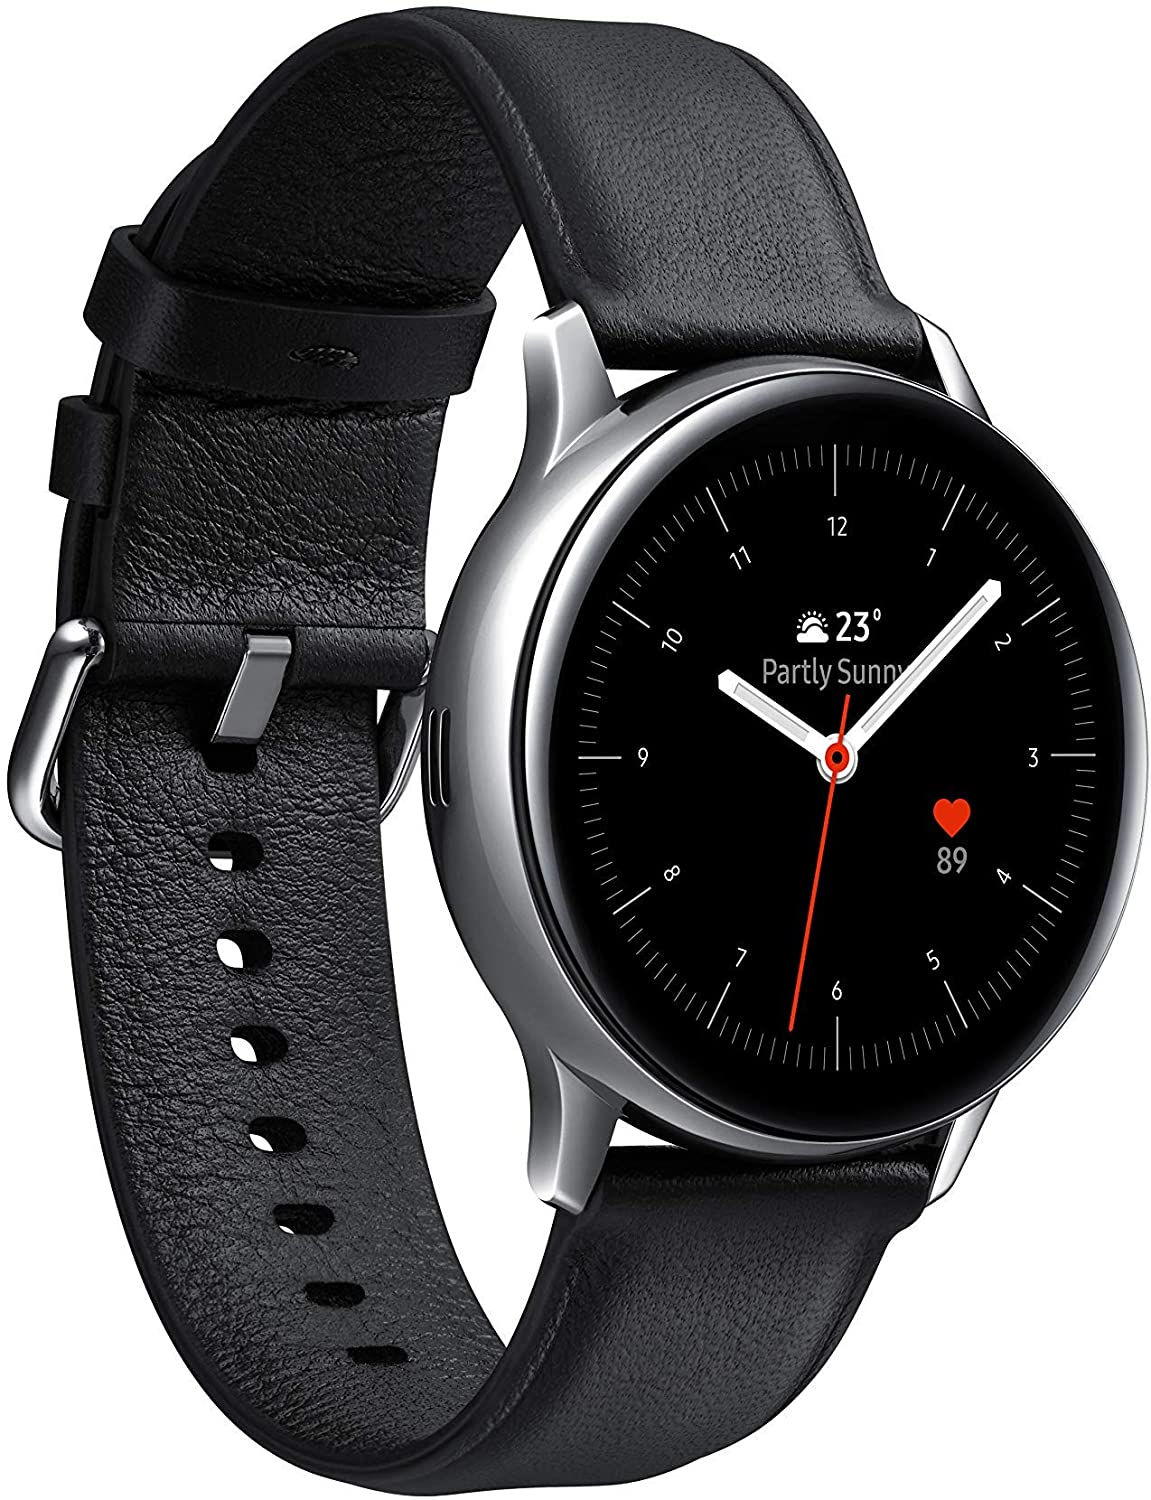 Samsung SM-R825USSAXAR-RB Galaxy Watch Active2 44mm 4G LTE Silver - Certified Refurbished